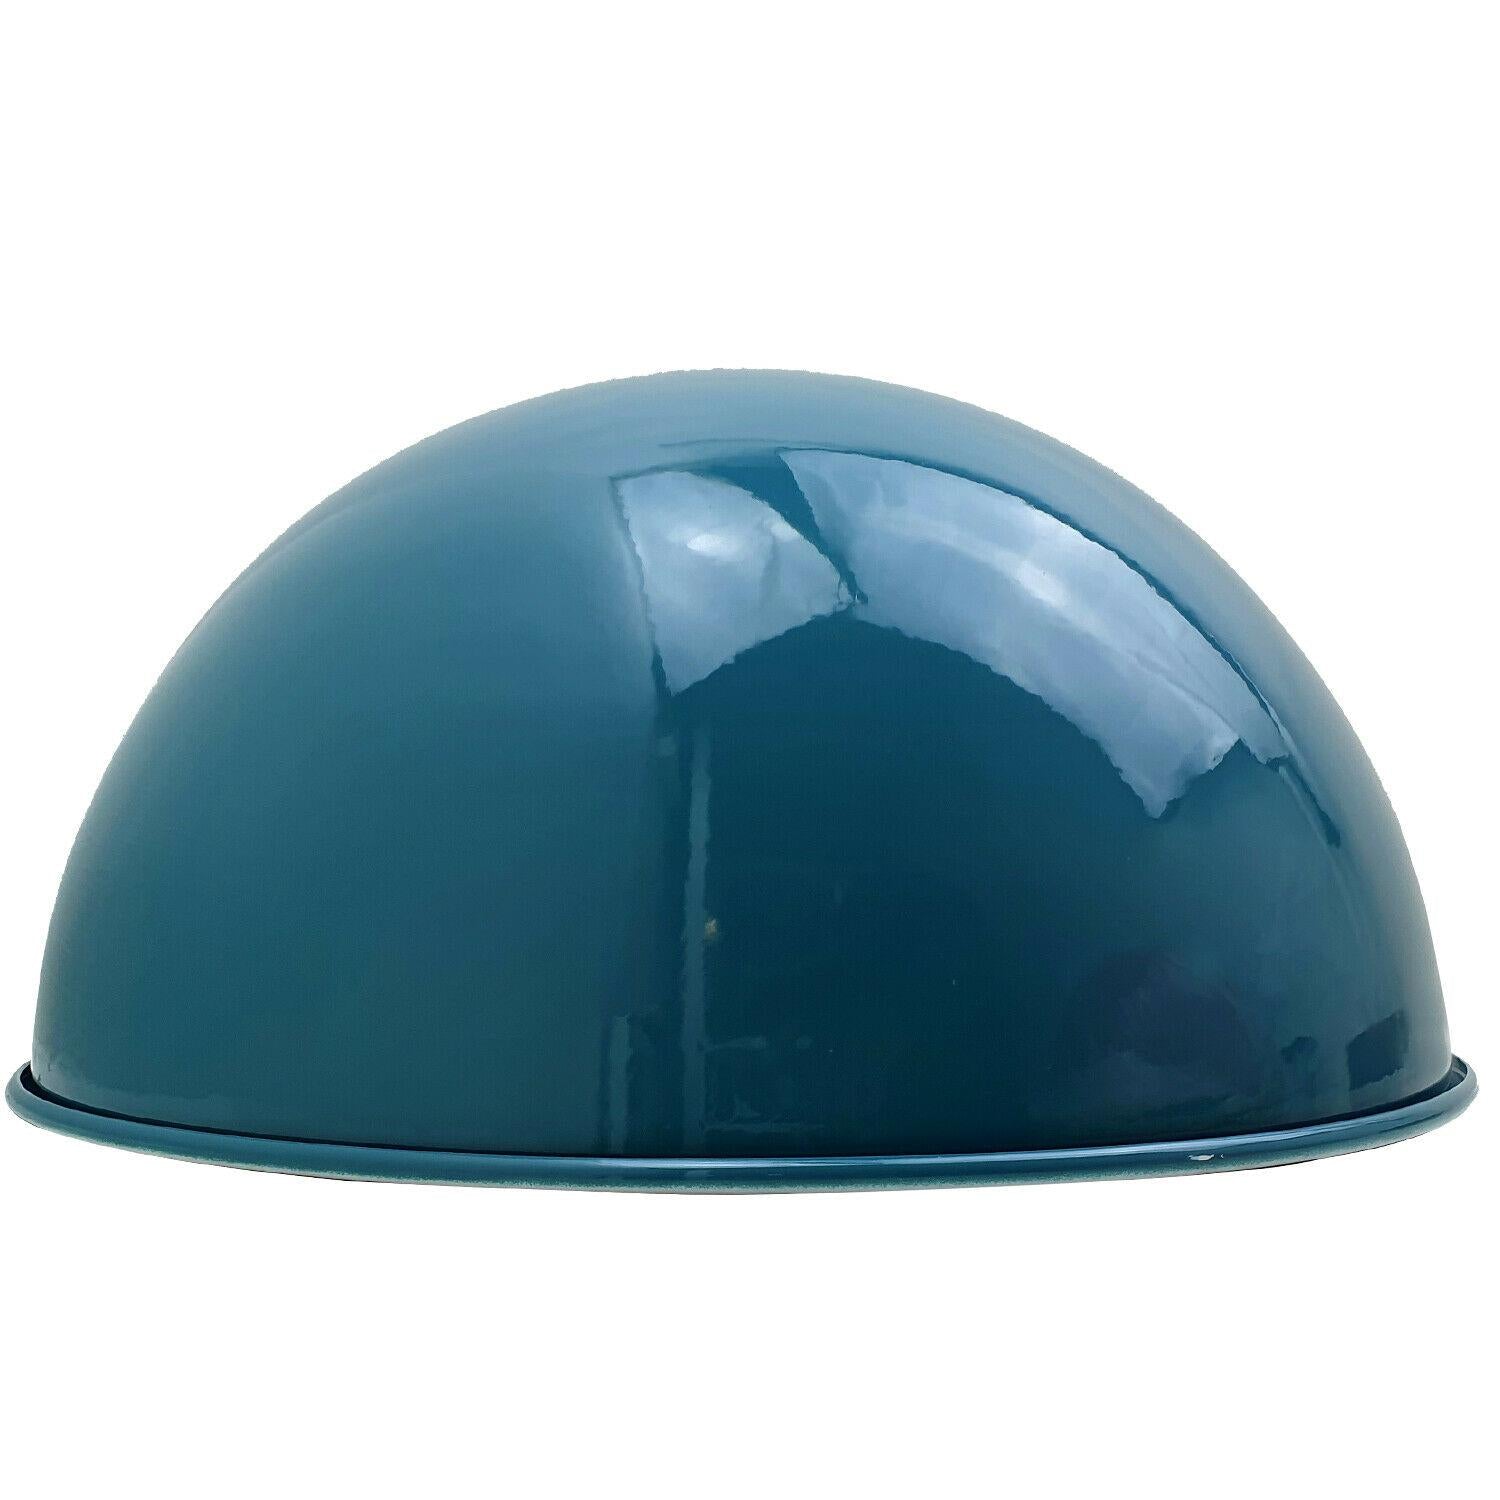 Retro Design Light Easy Fit 40cm Dome Lampshades Lighting~1384 - LEDSone UK Ltd